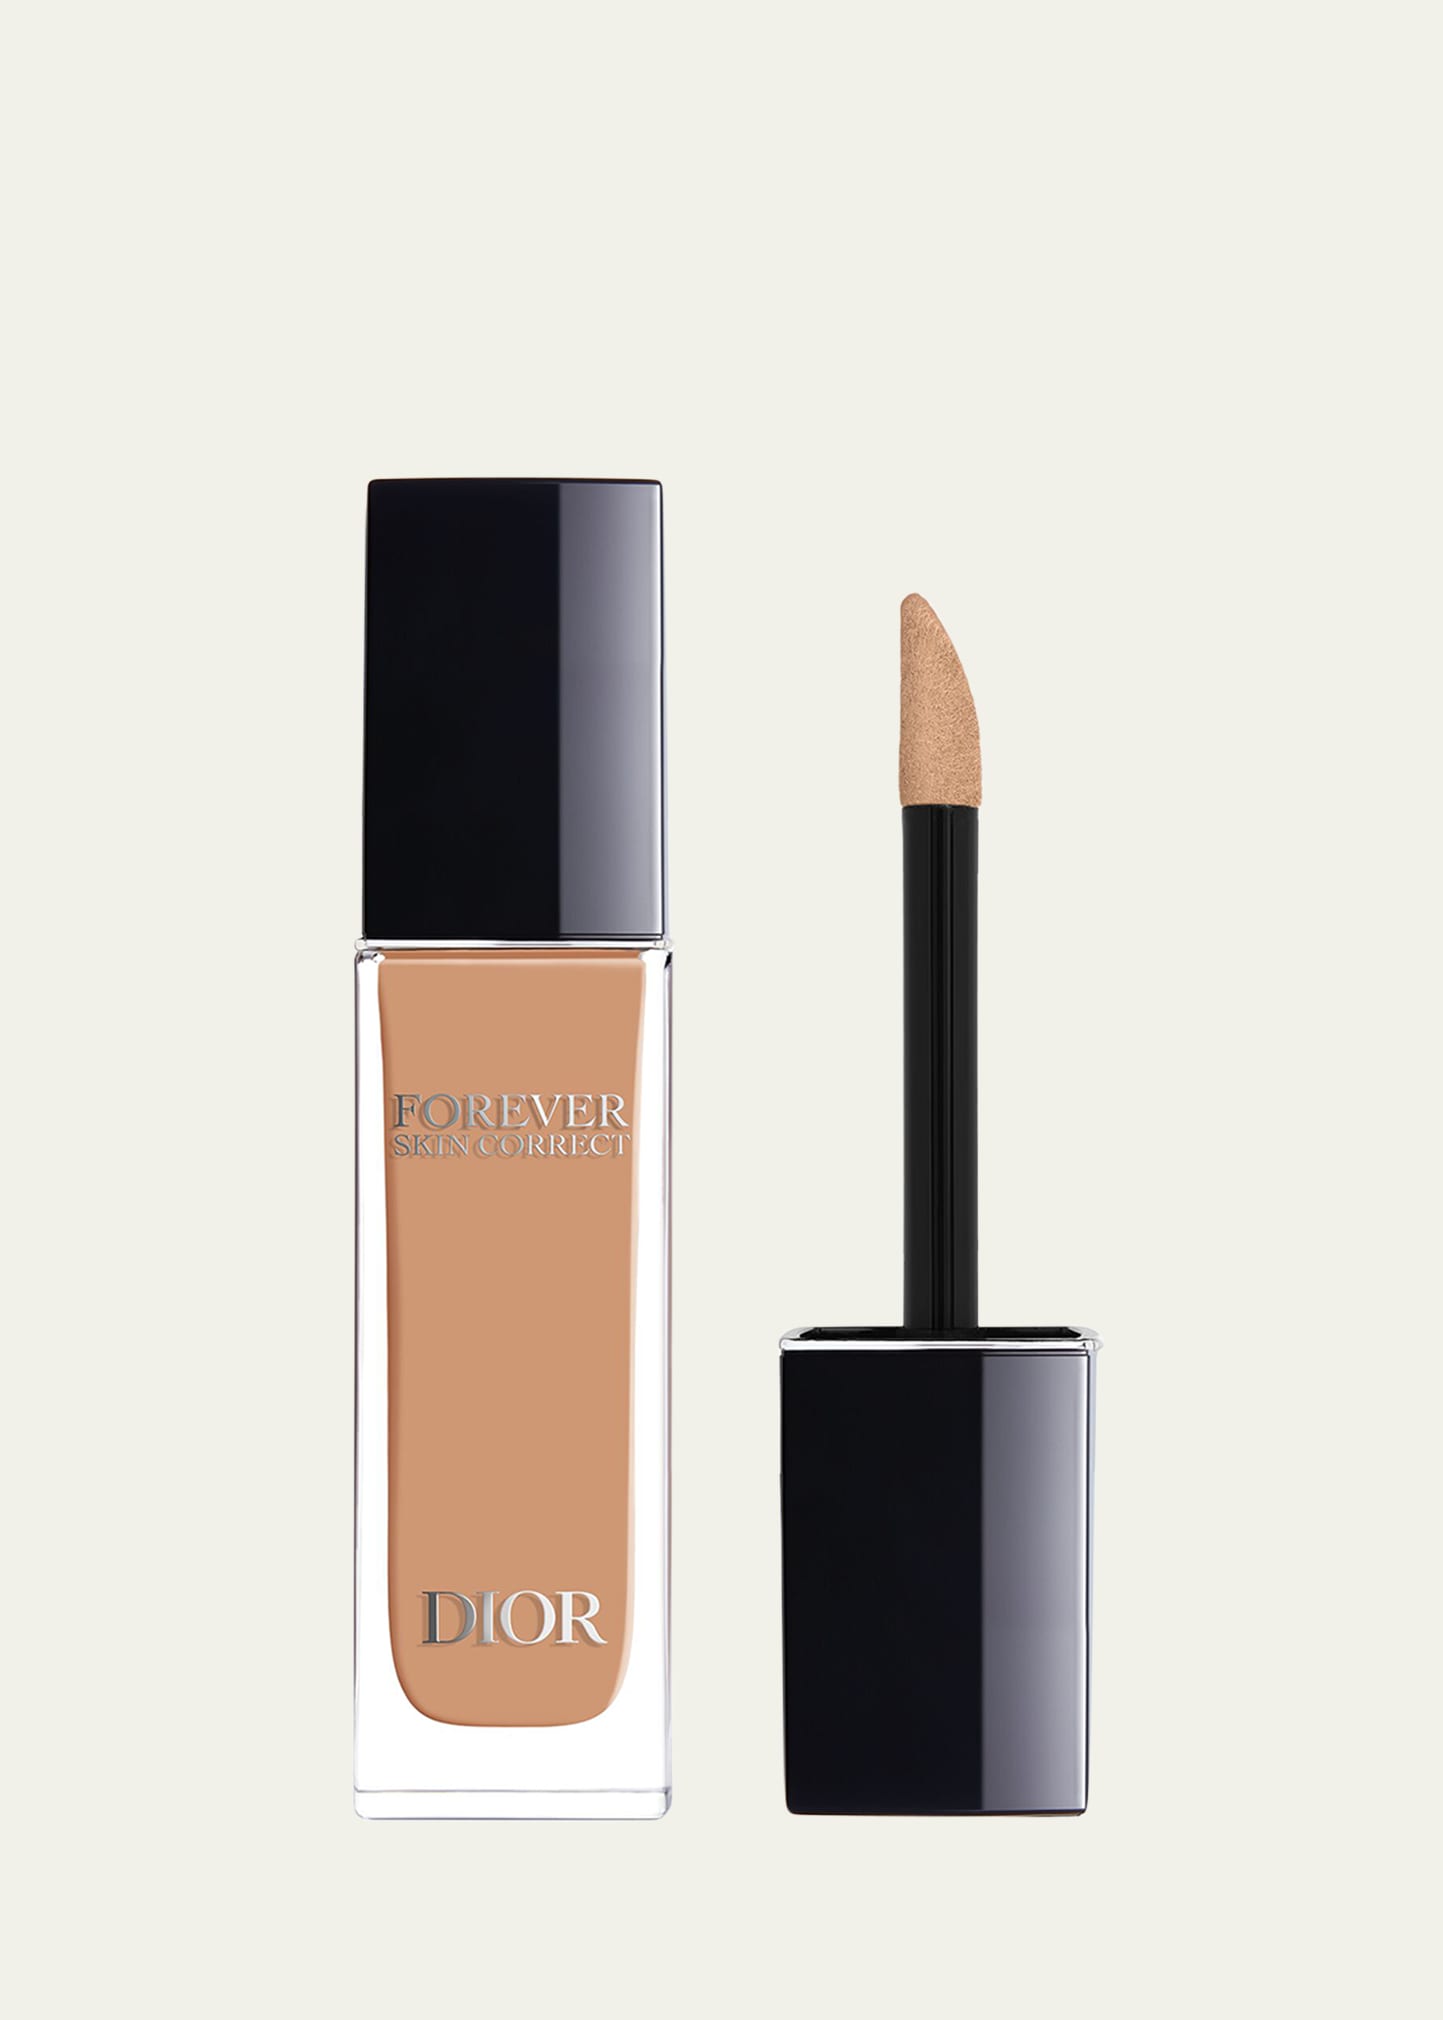 Dior Forever Skin Correct Full-coverage Concealer In 4 N Neutral